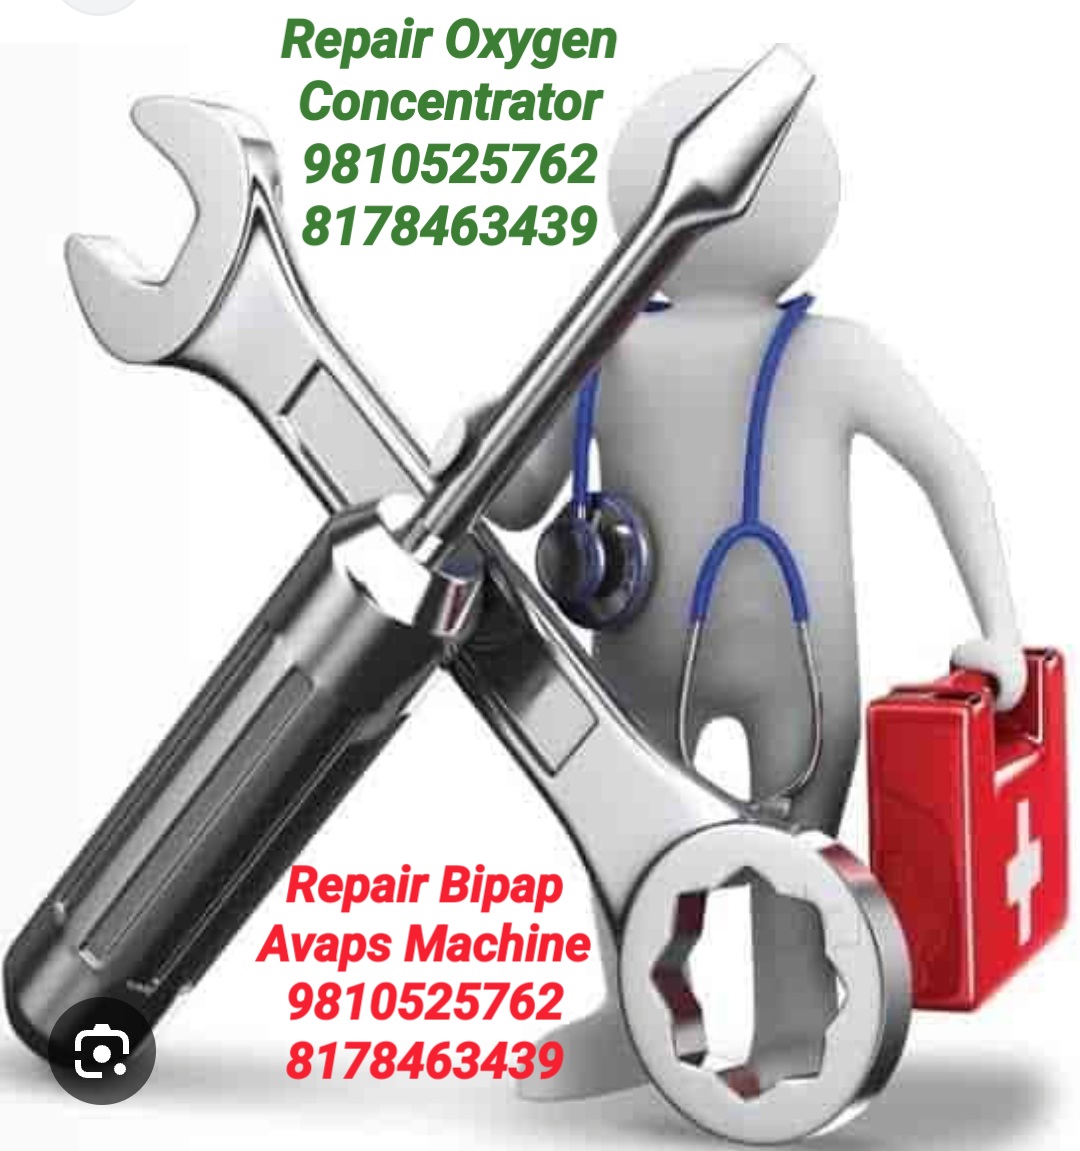 Repair Bipap Avaps Machine In Ghaziabad 8178463439